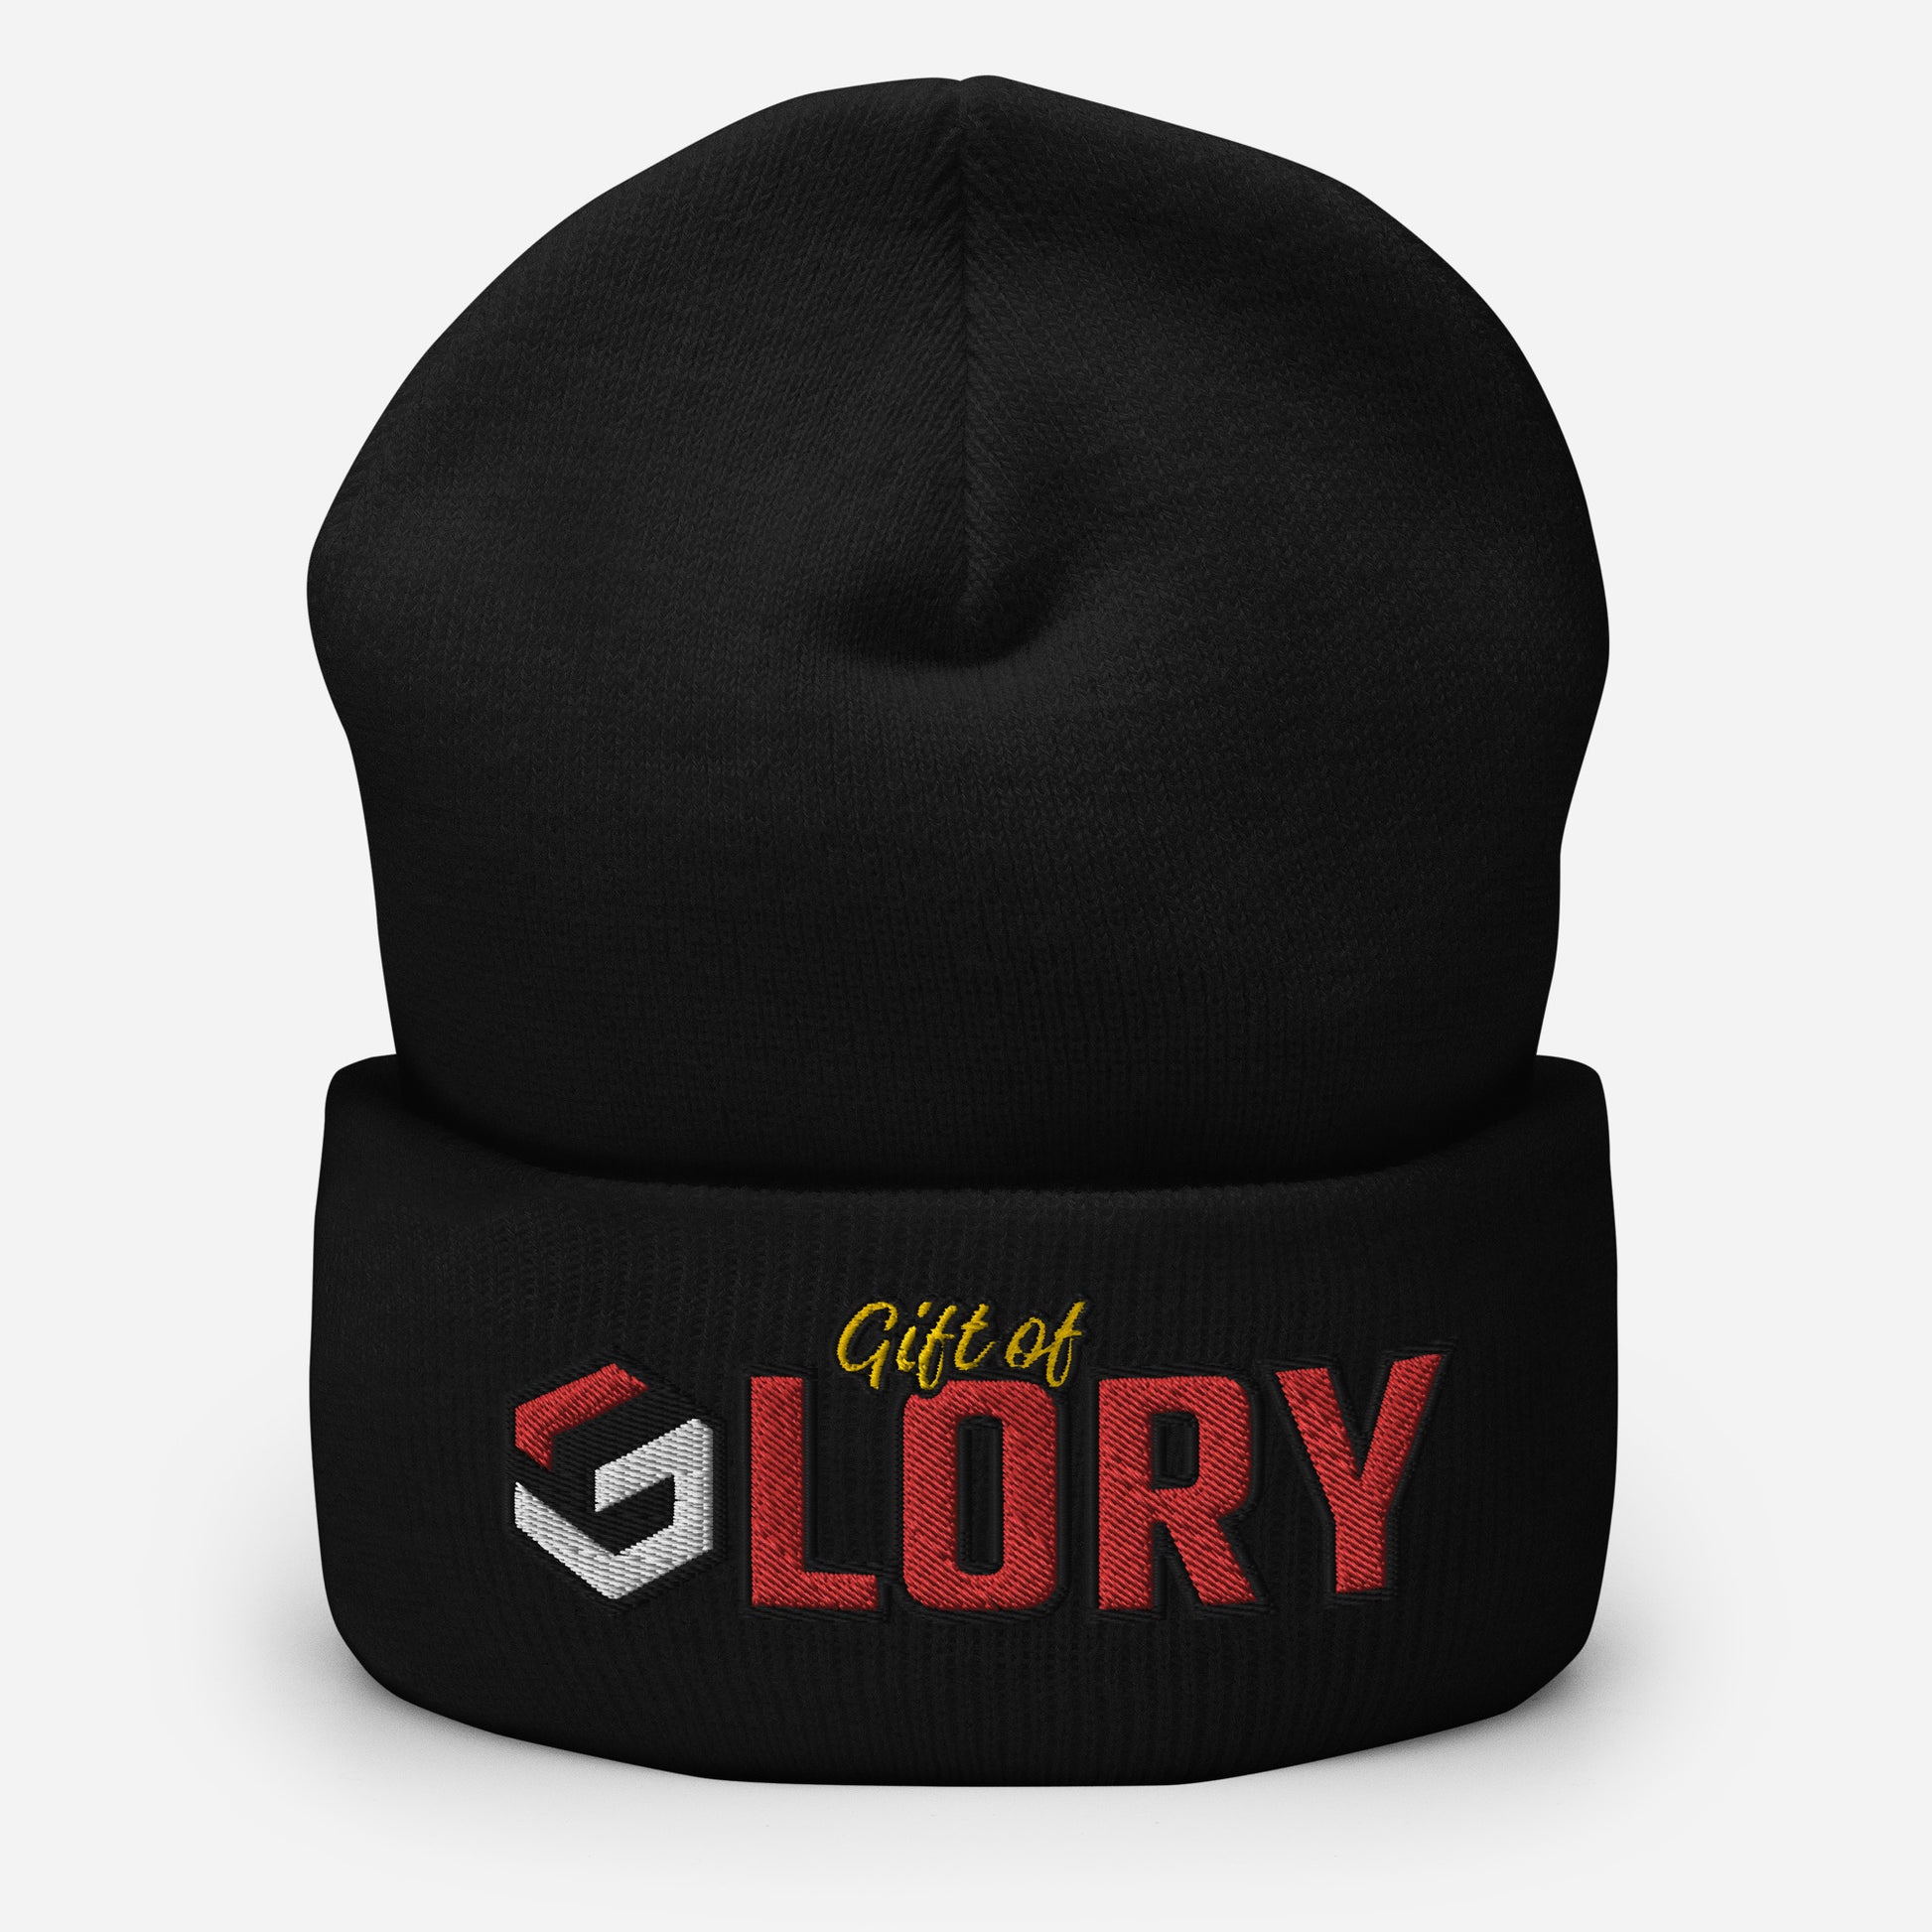 GLORY Gray/Black Beanie - Gift of Glory